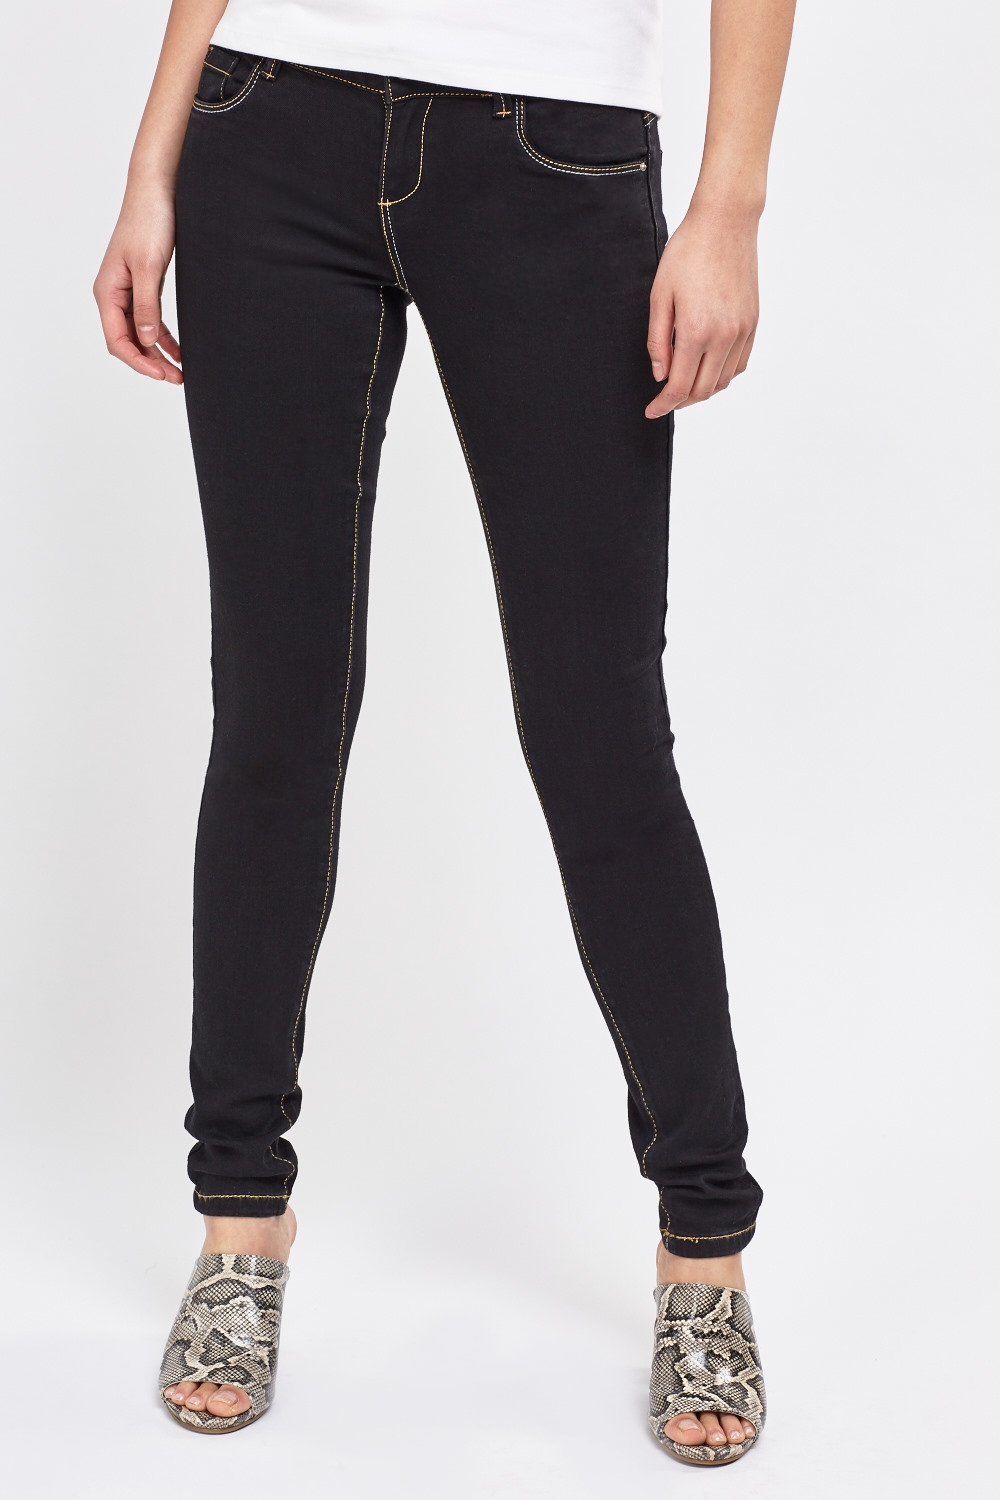 Gaspard Promod Skinny Jeans - Just $7